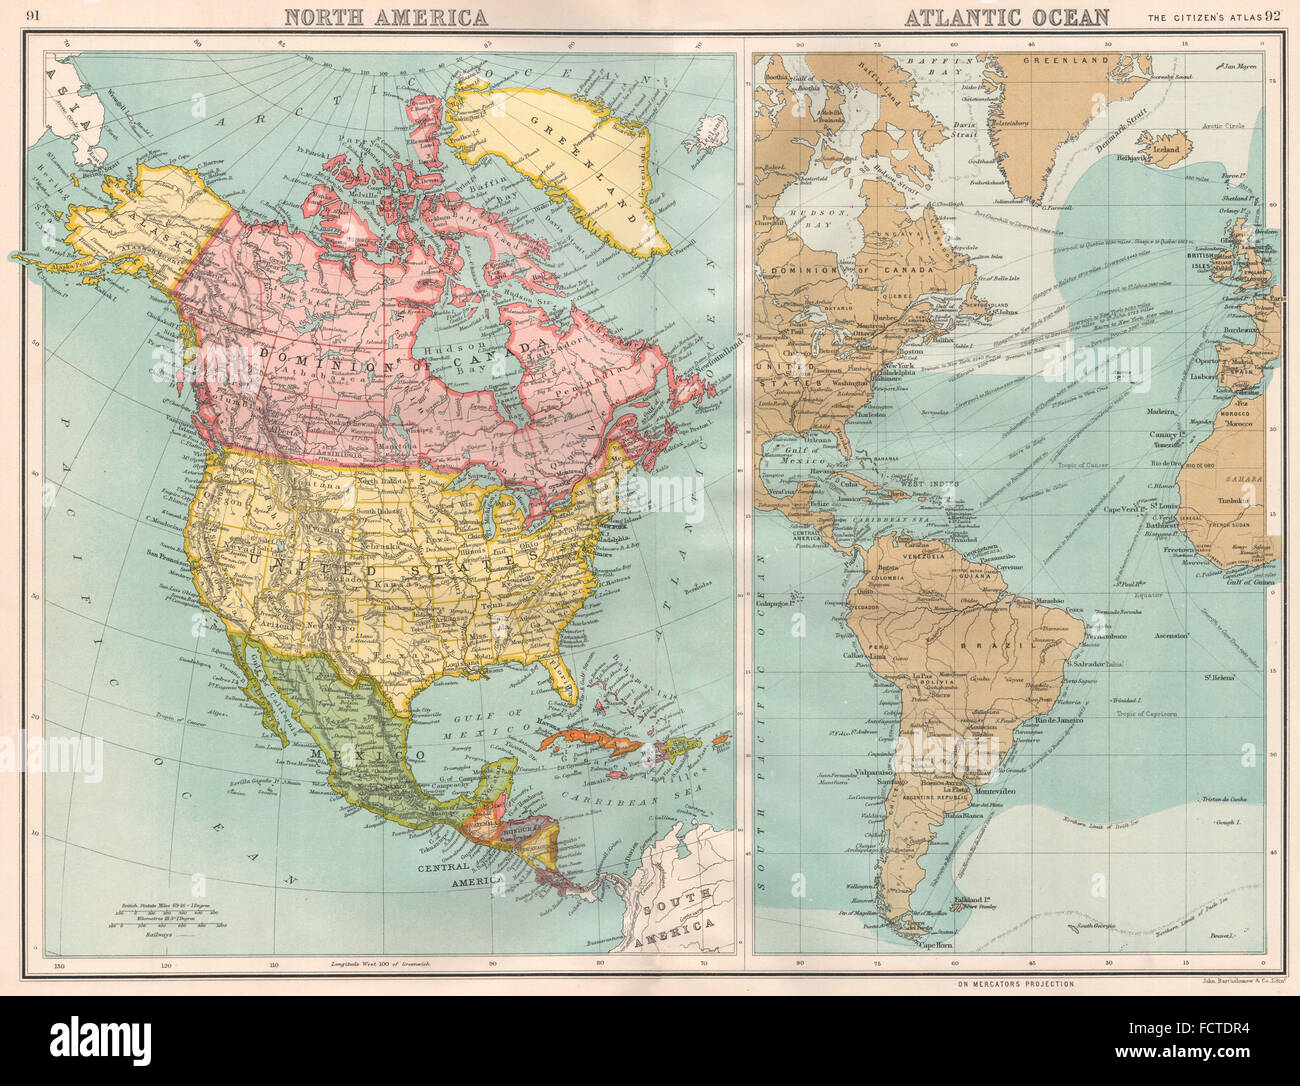 NORTH AMERICA/ATLANTIC OCEAN: Shipping routes. BARTHOLOMEW, 1898 antique map Stock Photo